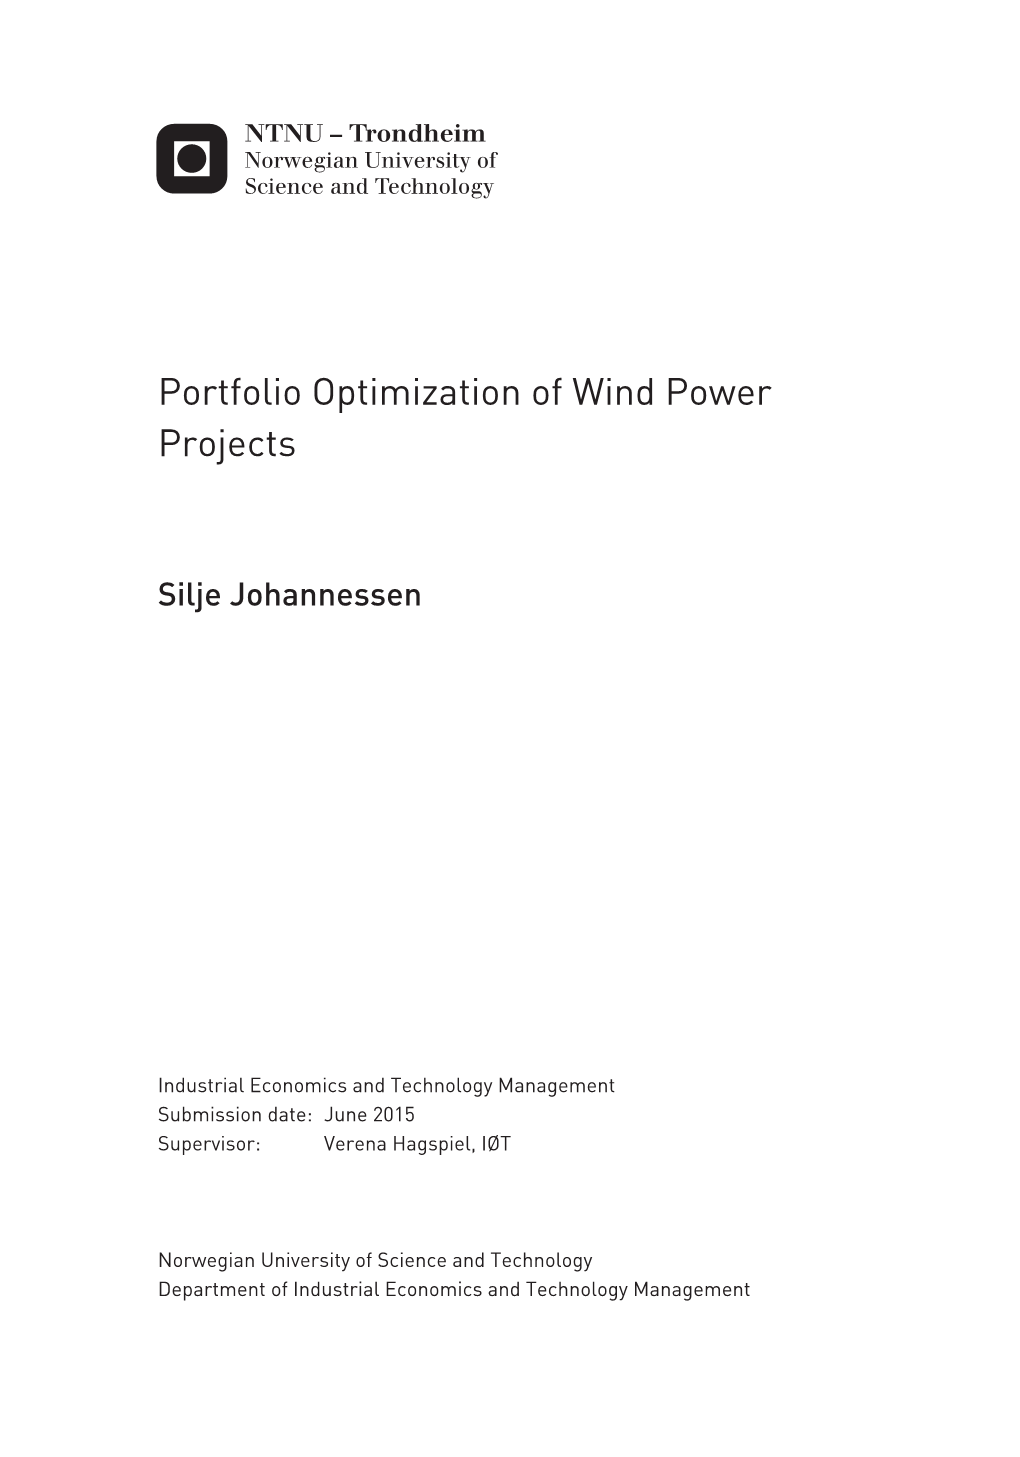 Portfolio Optimization of Wind Power Projects